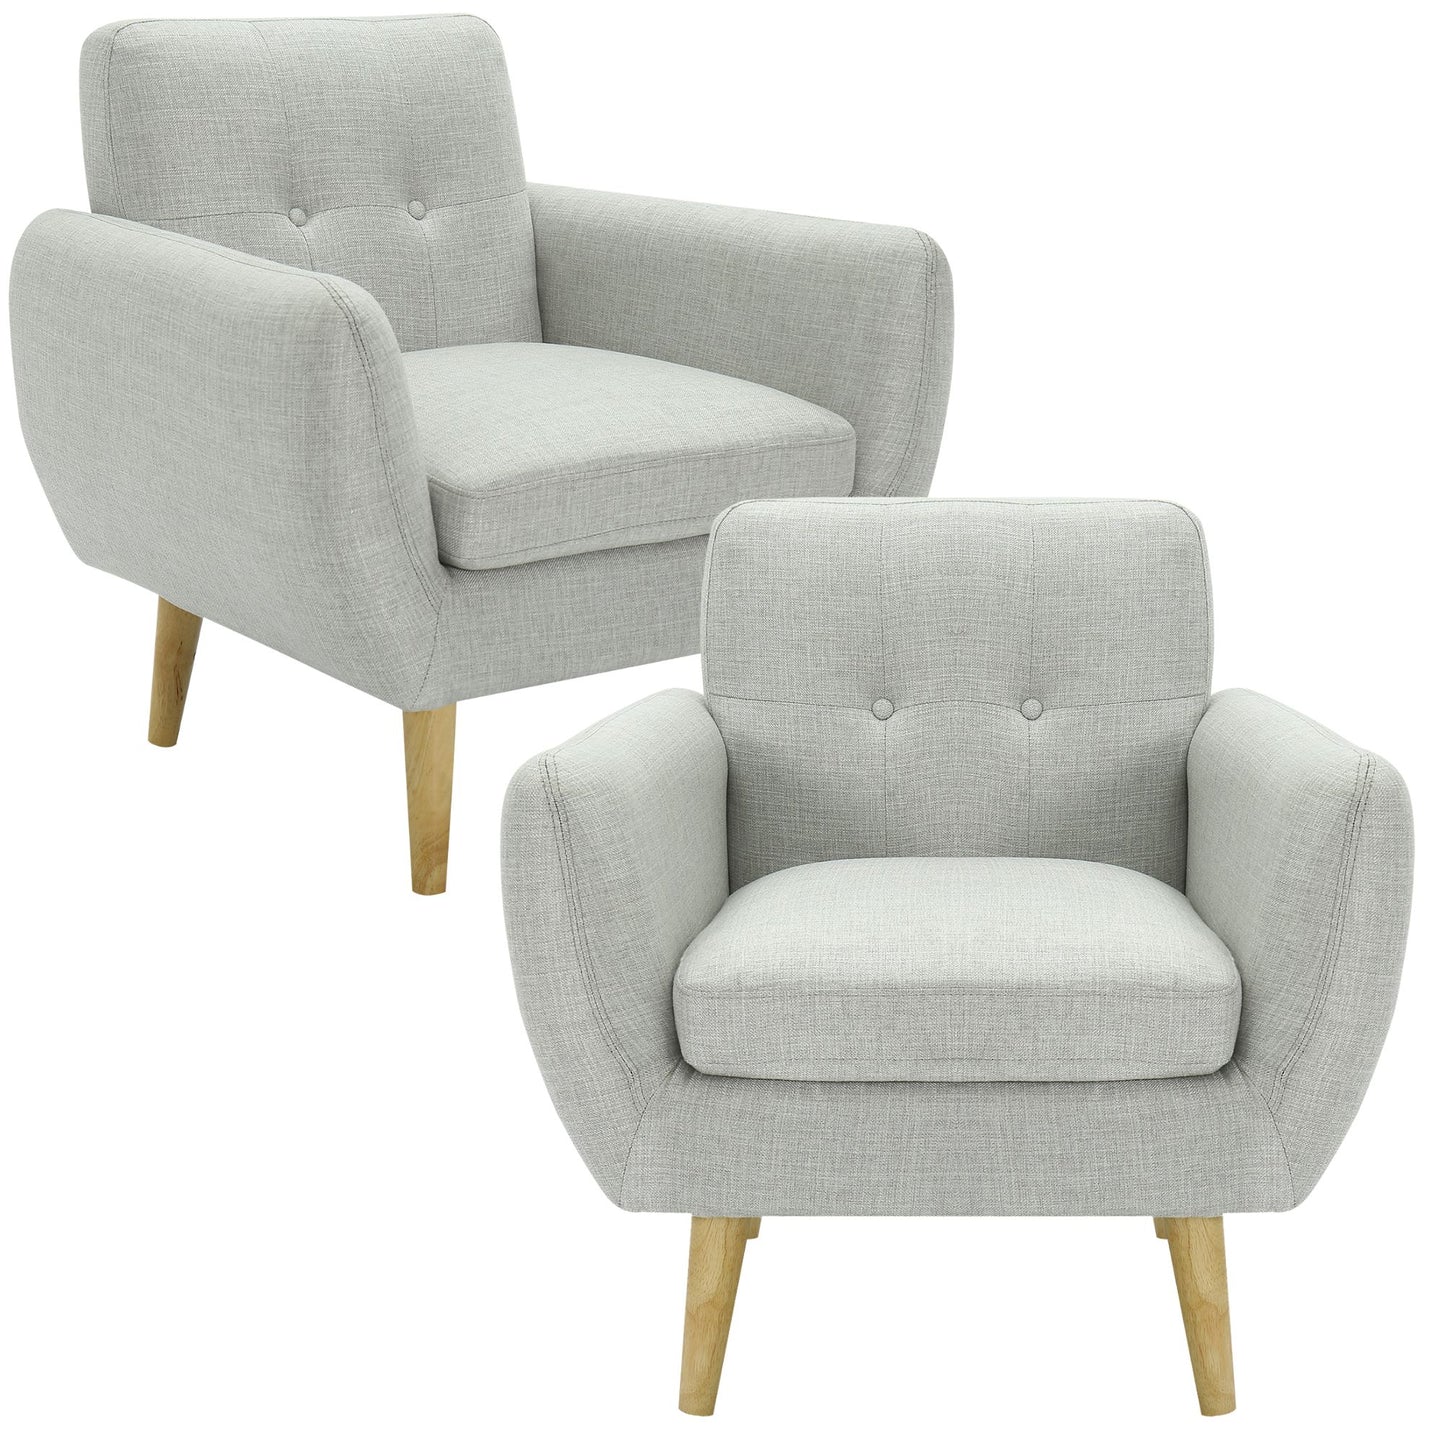 Set of 2 Single Seater Armchairs - Light Grey